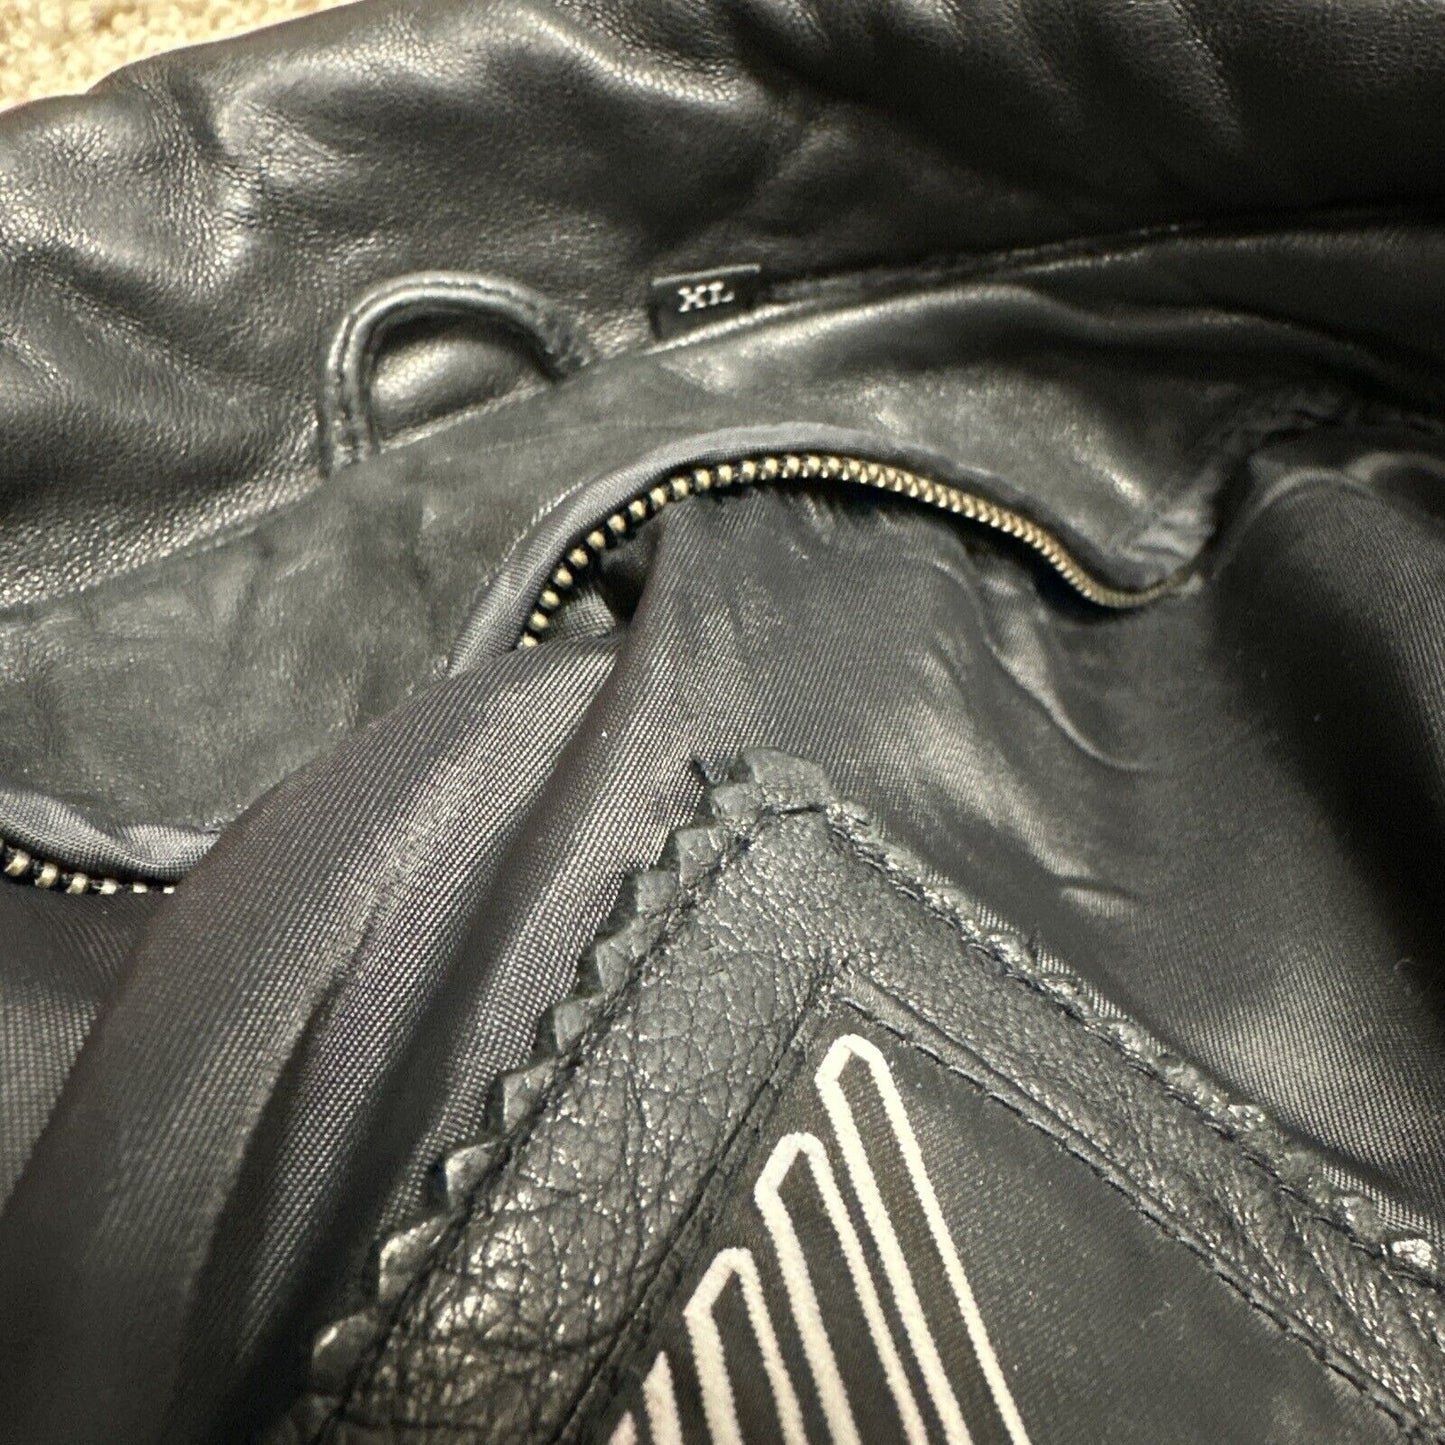 Men’s Tibor Leathers XL Leather Jacket Black Jacket Only